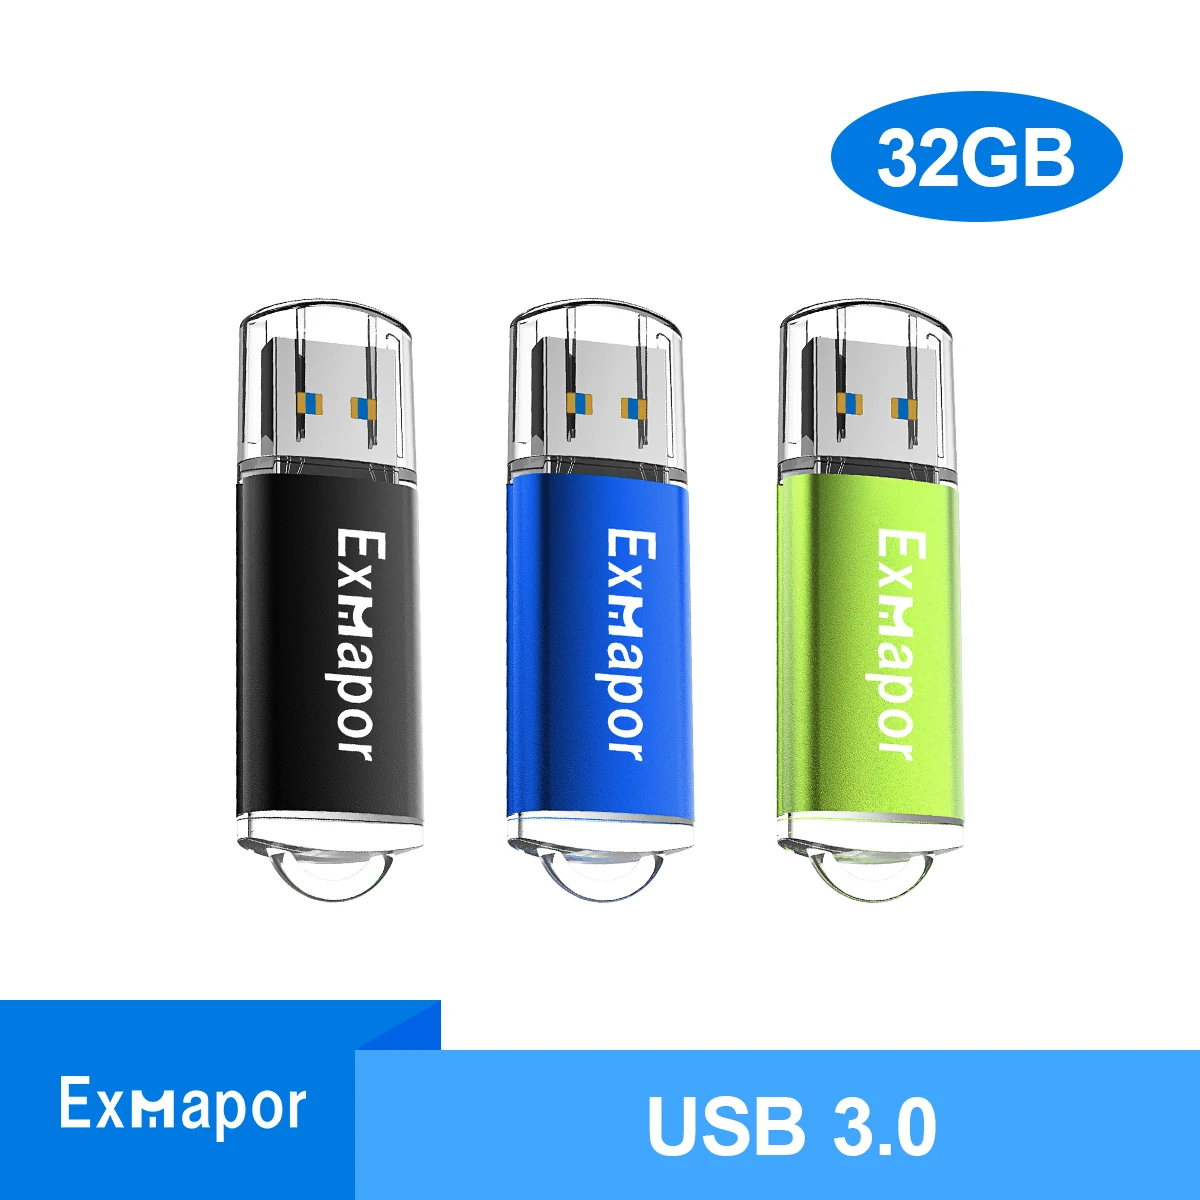 

32GB Flash Drive USB 3.0, Exmapor USB Drive 32 GB USB3.0 High Speed 3 PCS Memory Stick Thumb Drives for PS4/PC/Laptop/Computer